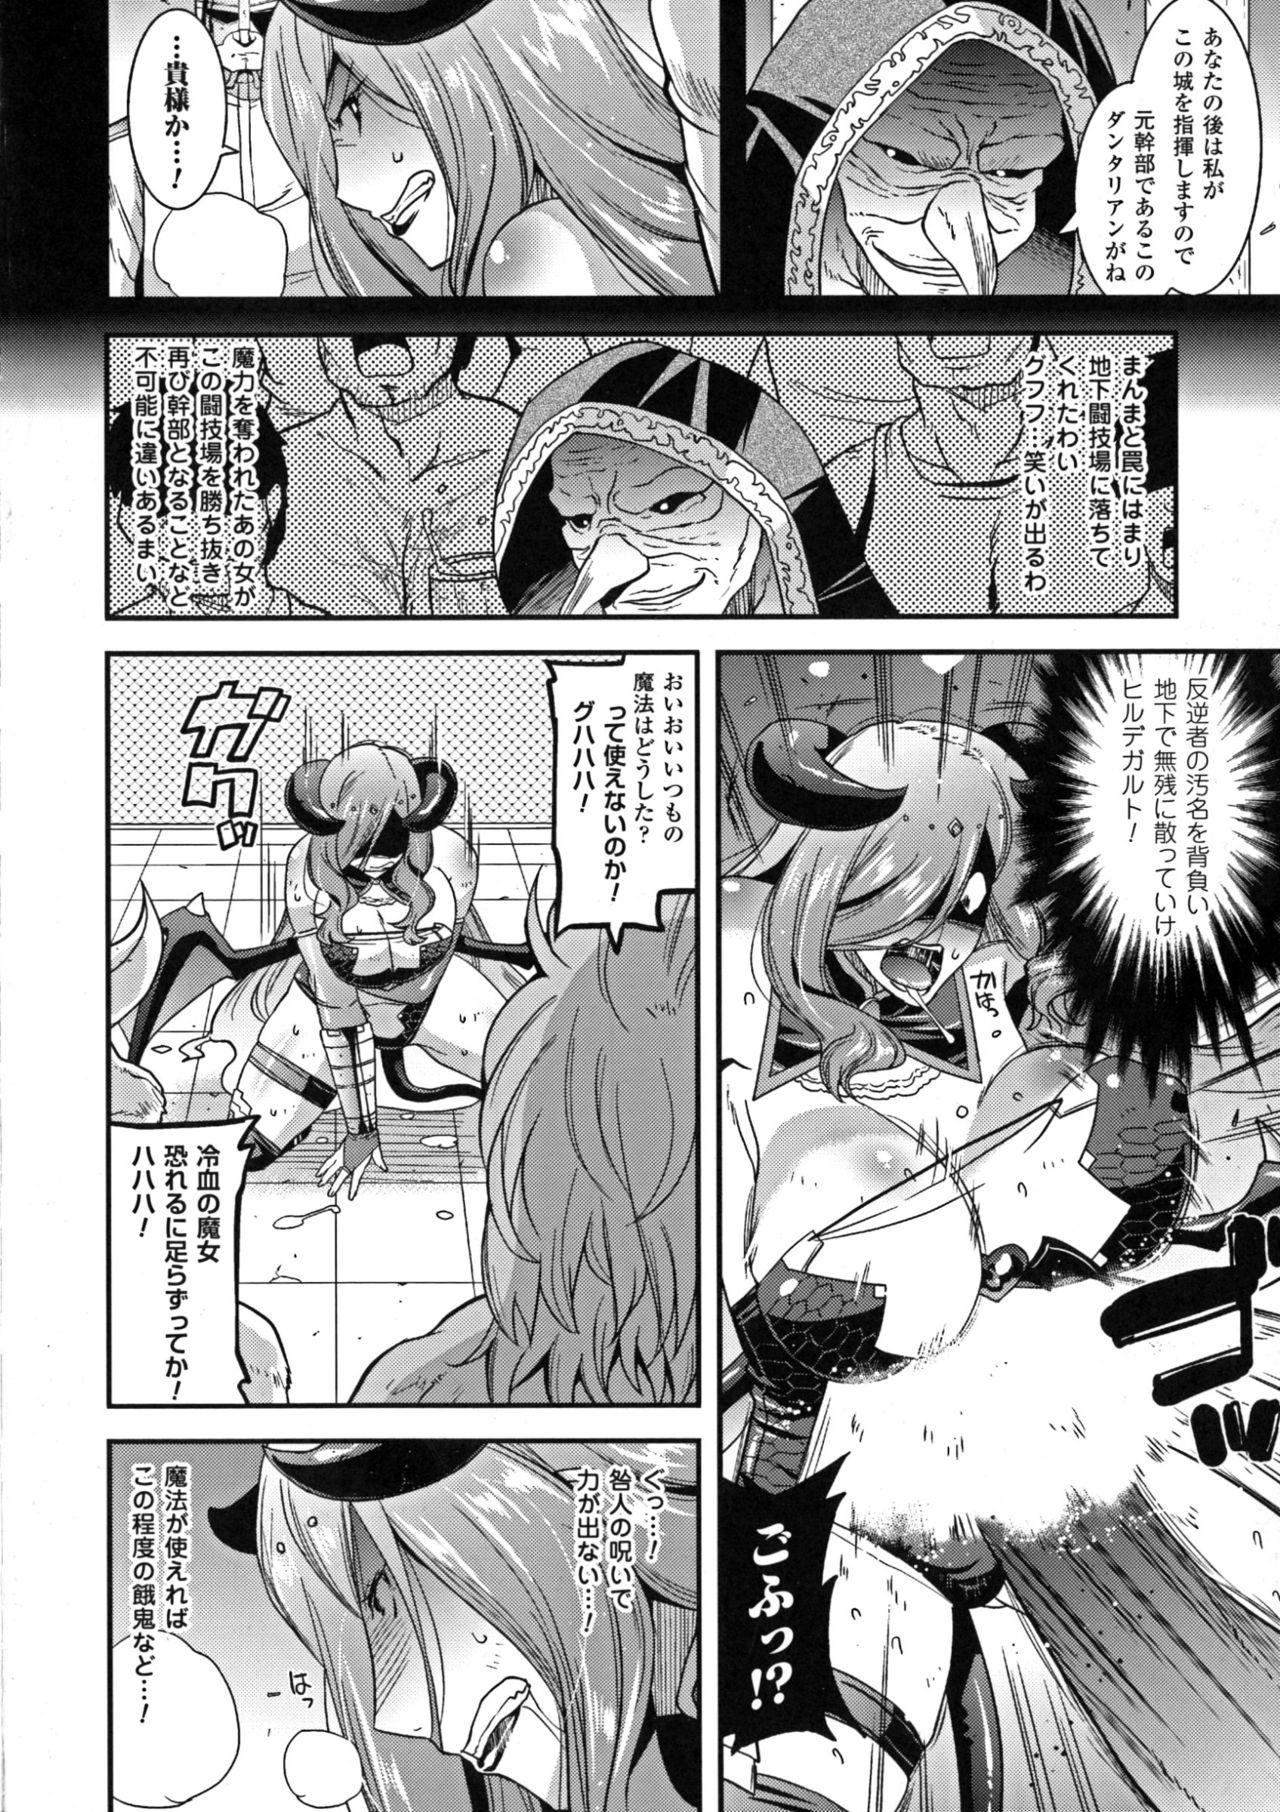 Seigi no Heroine Kangoku File DX vol. 5 185